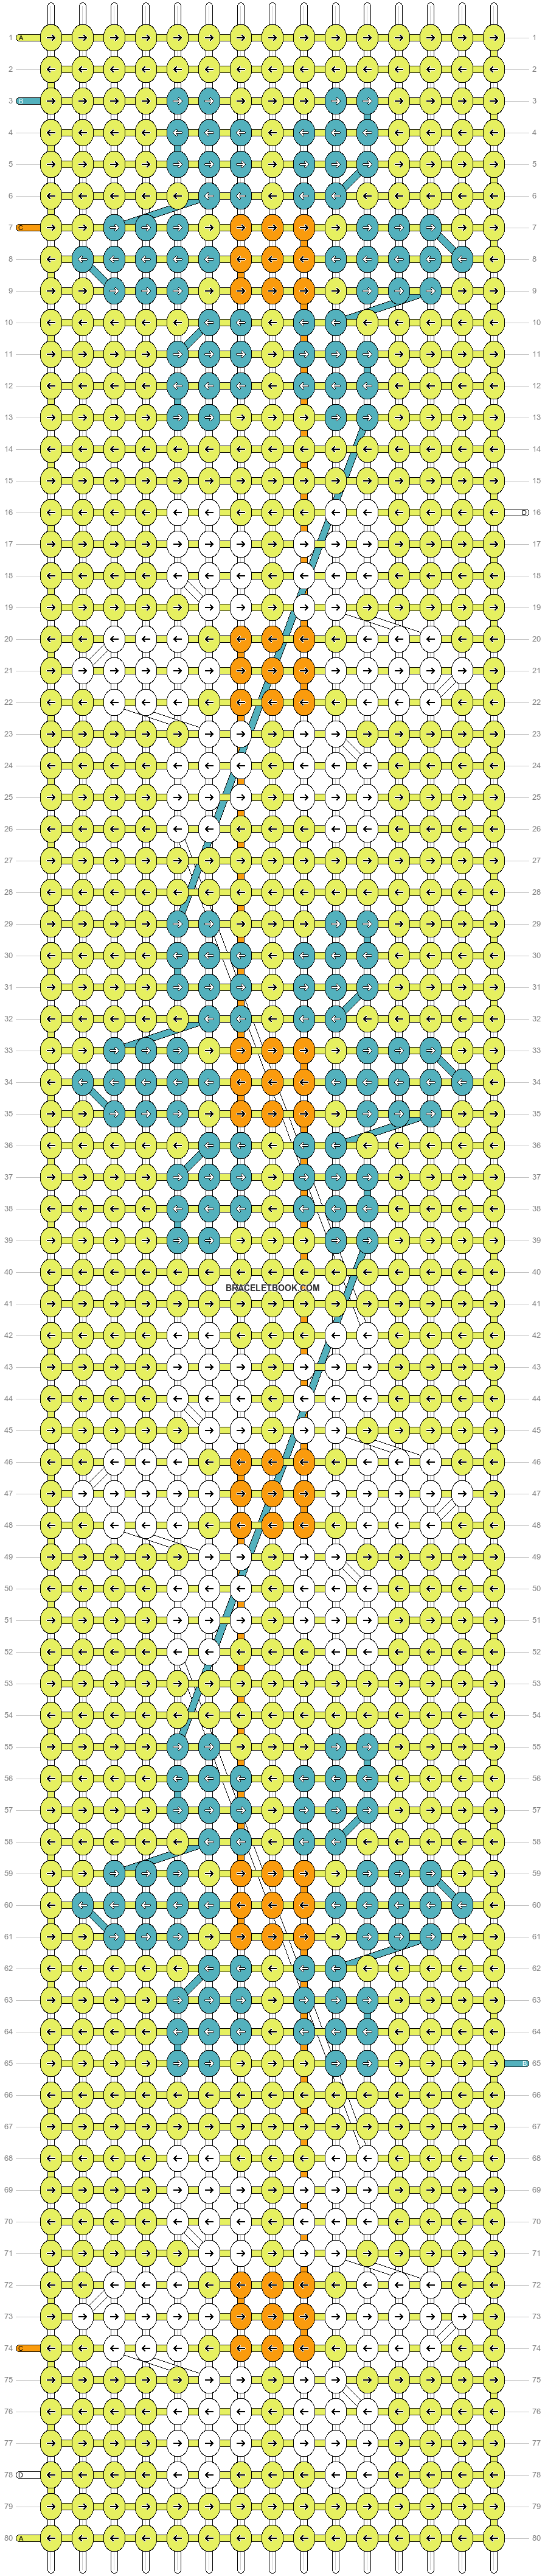 Alpha pattern #22187 variation #40551 pattern